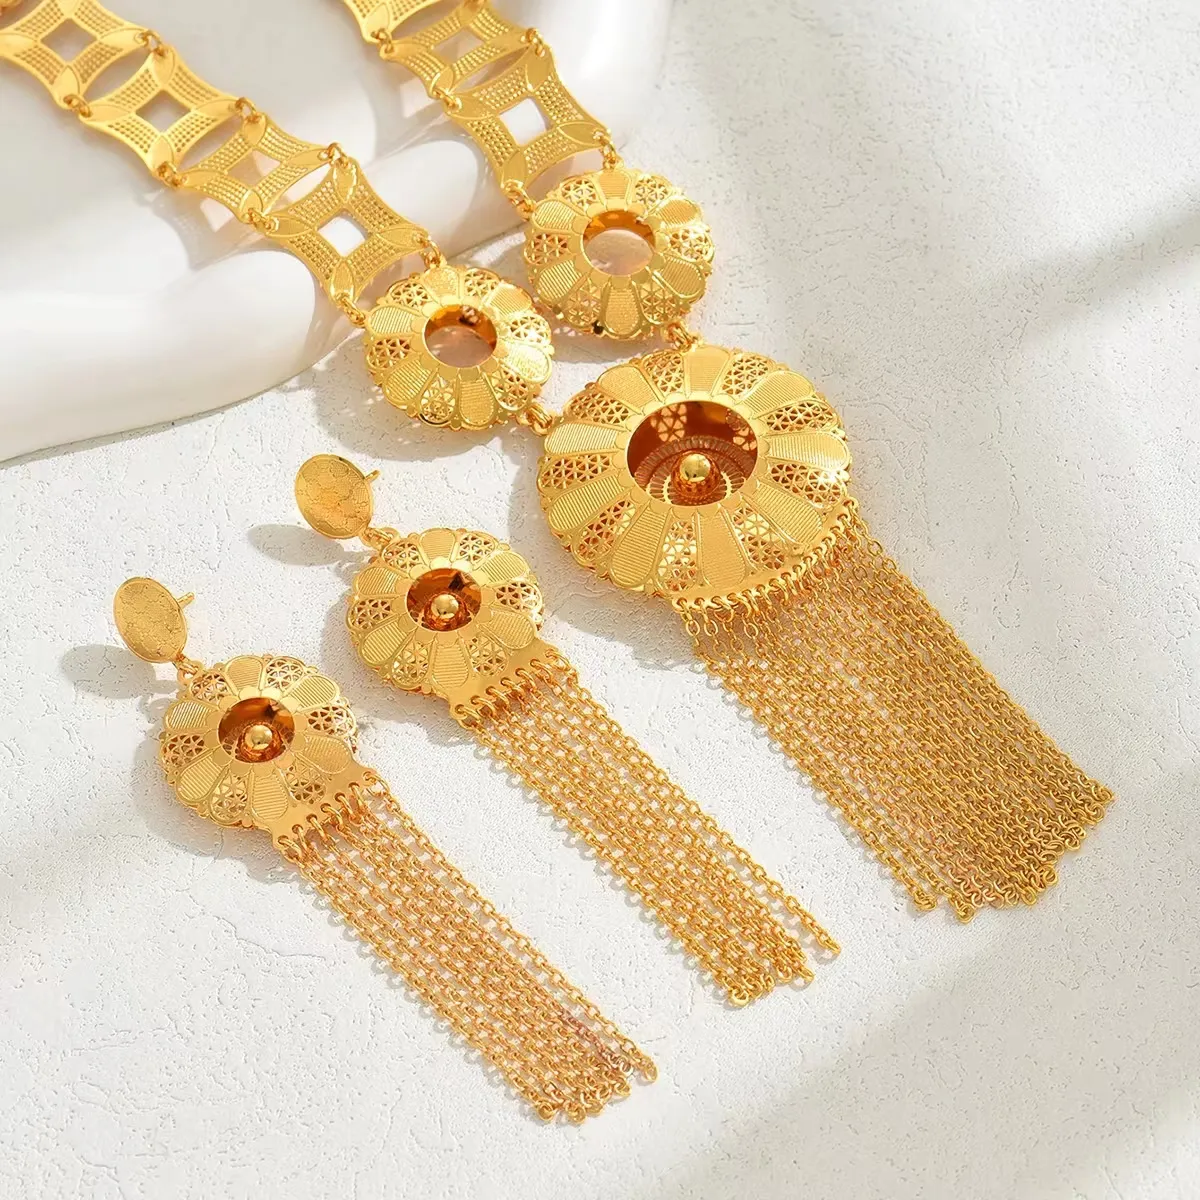 Cross border Dubai 24K Gold Jewelry Set Nigerian Bride Necklace Bracelet Earring Ring Women's Four Piece Set